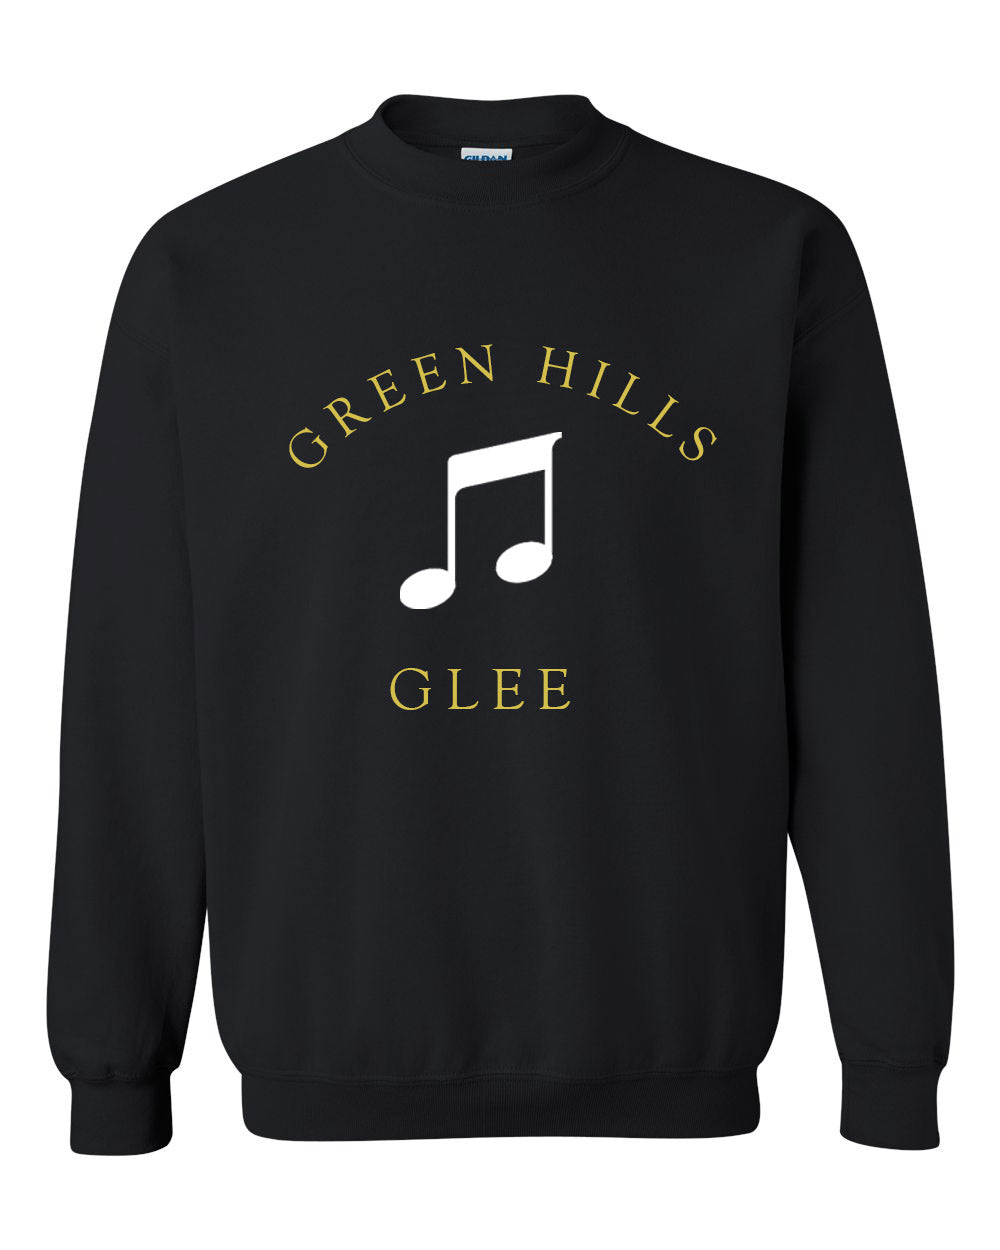 Green Hills Design 10 non hooded sweatshirt